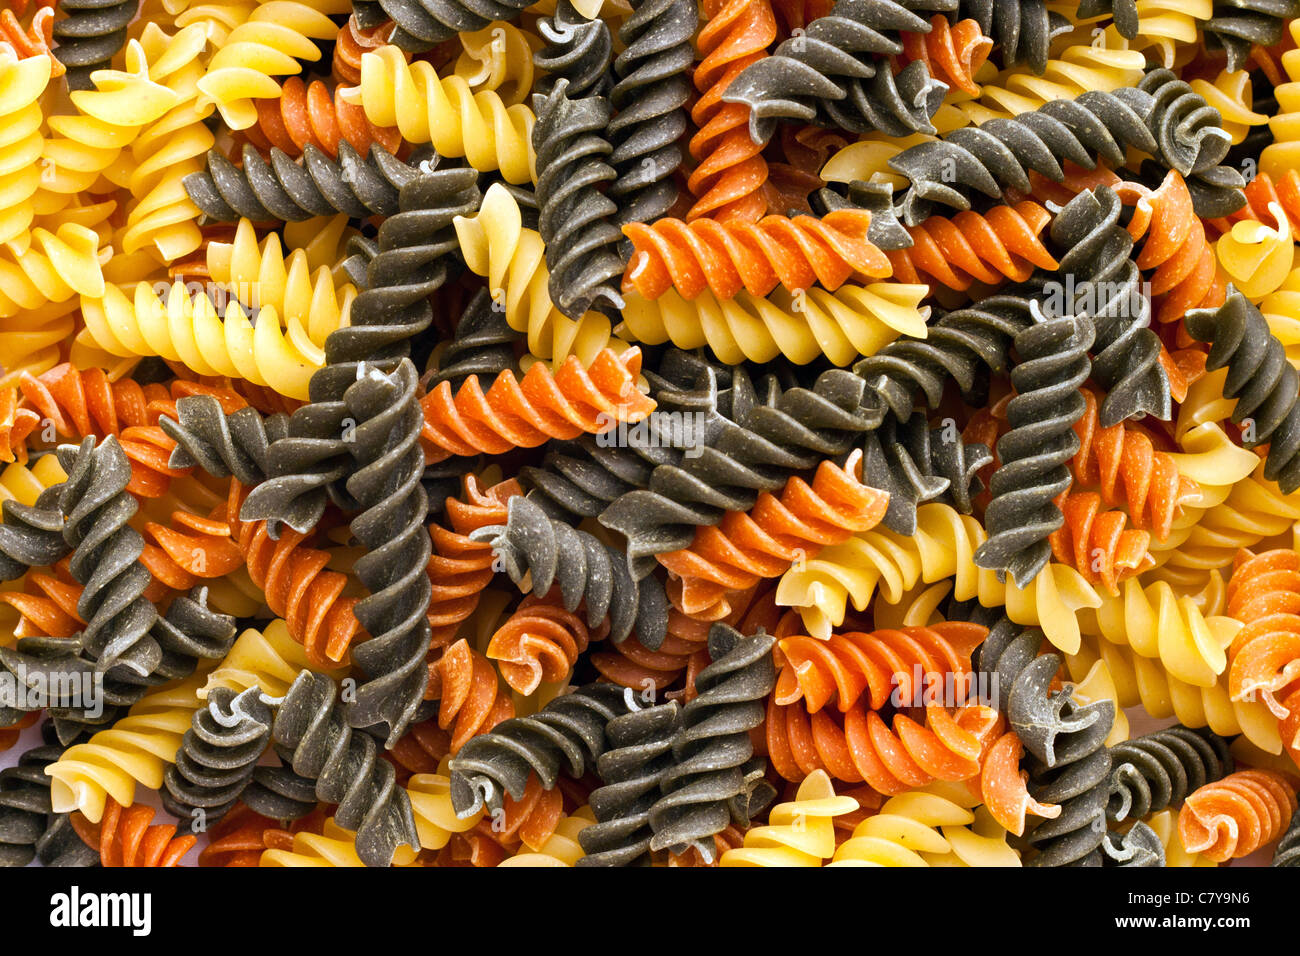 Tri-colored spiral pasta covering screen Stock Photo